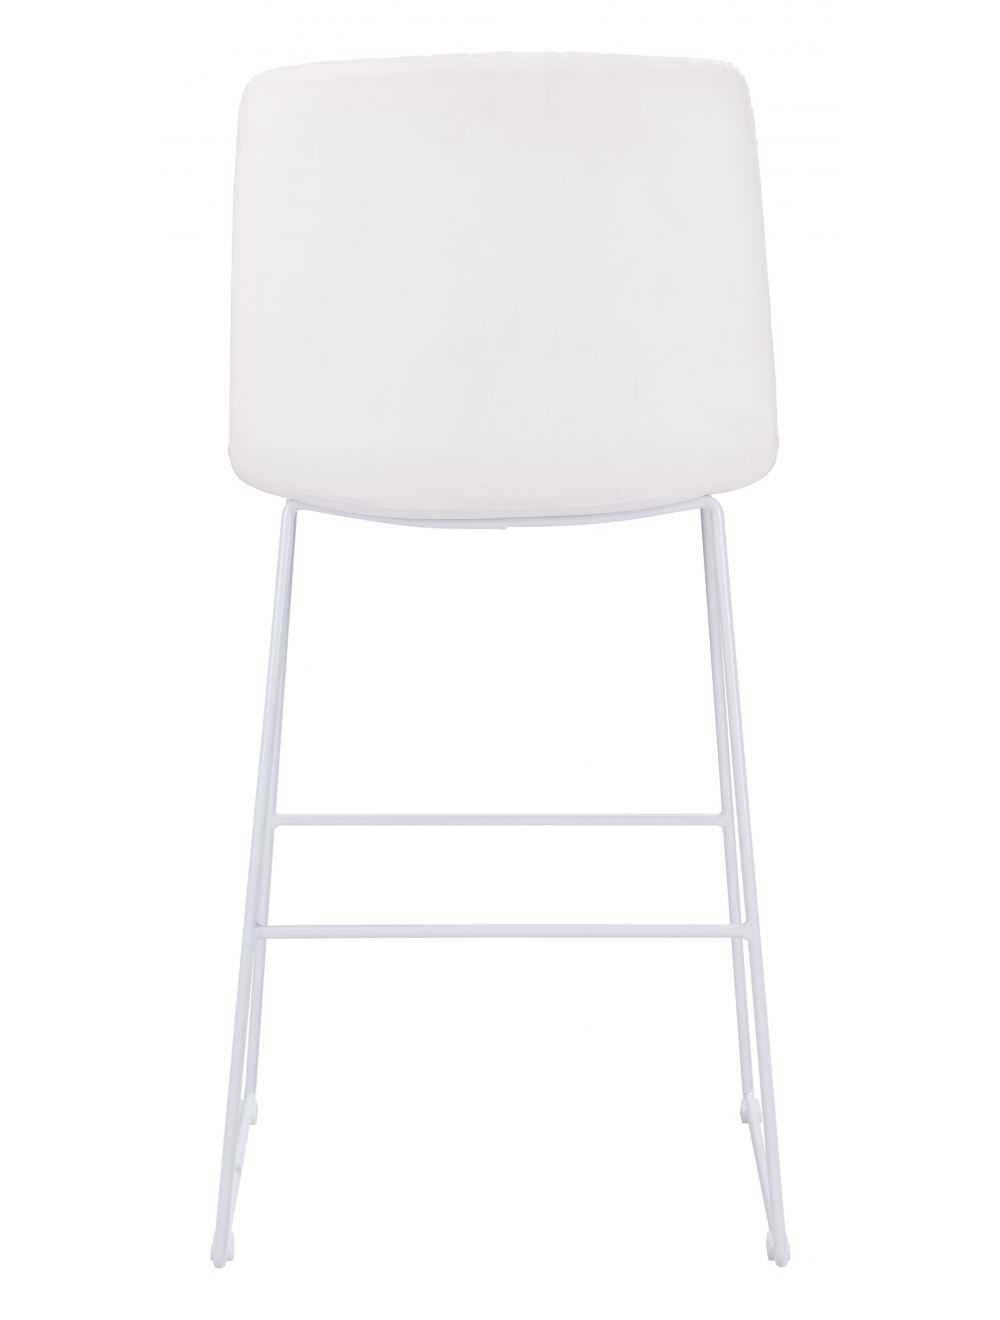 Mode Bar Chair (Set of 2) White